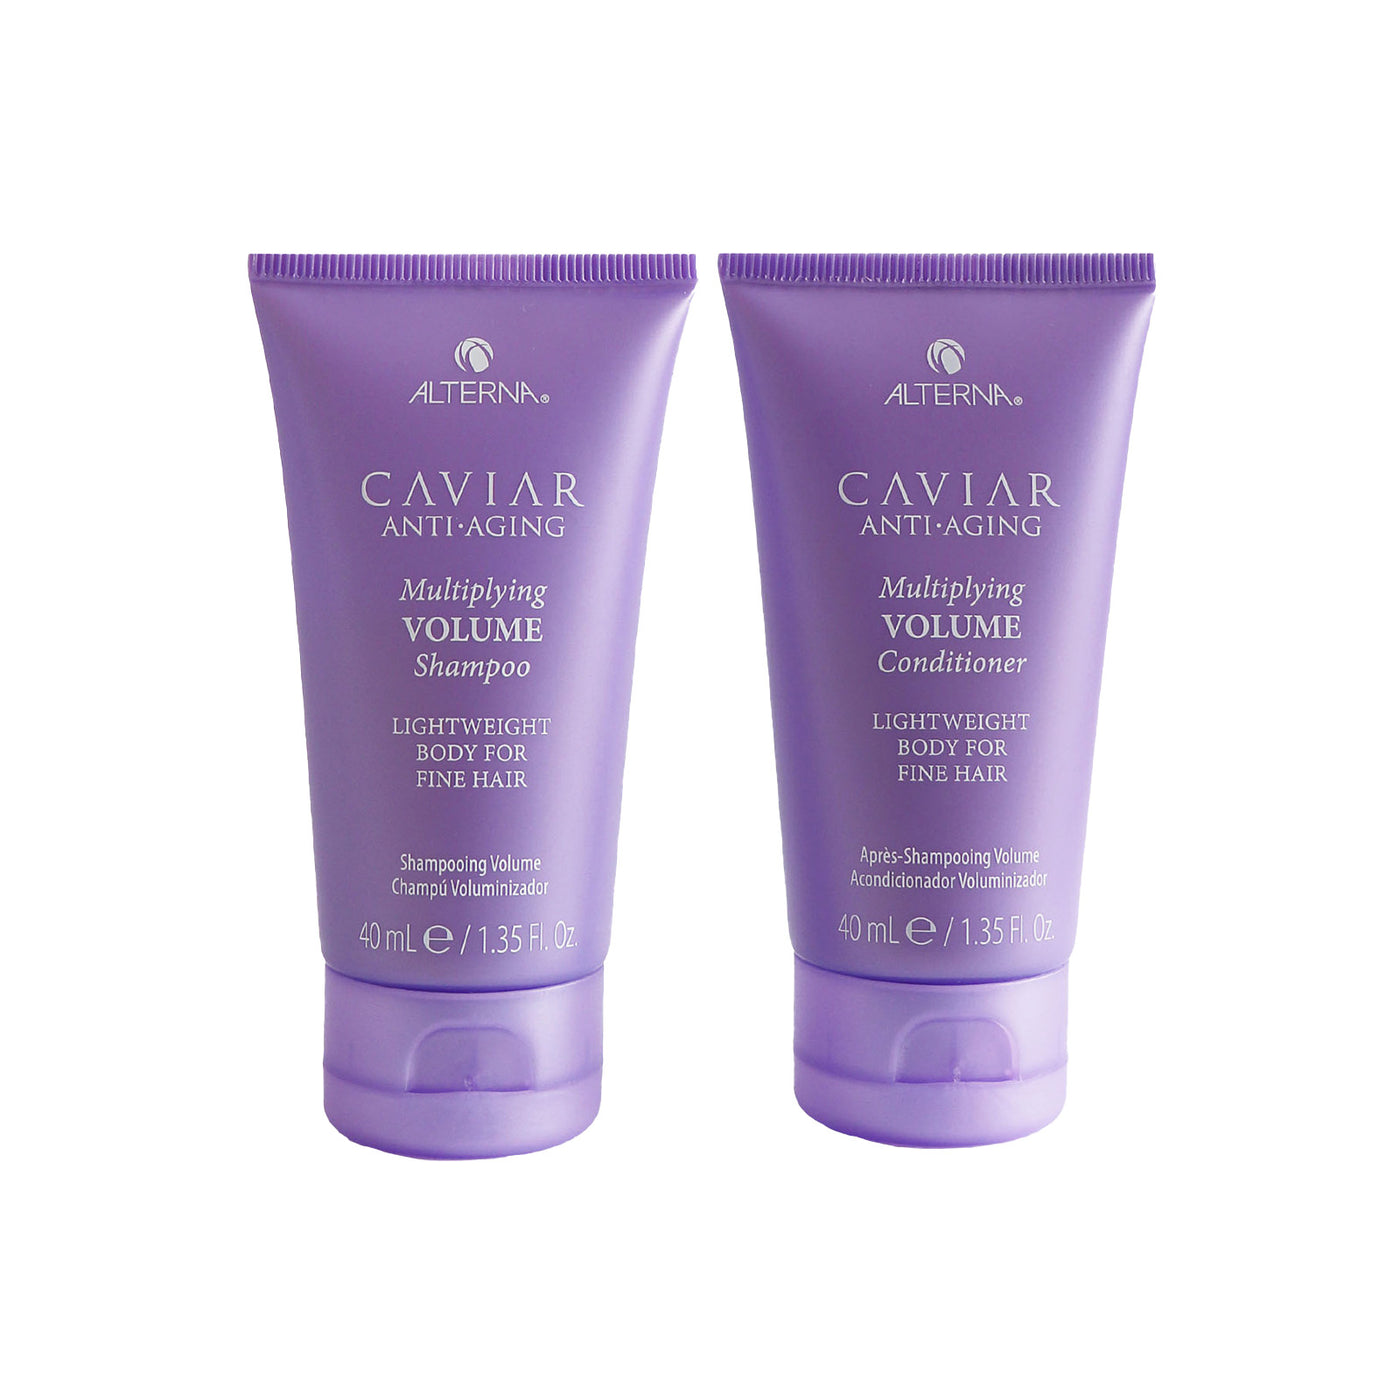 Alterna Caviar Anti-Aging Multiplying Volume Shampoo Conditioner Mini Duo 40ml